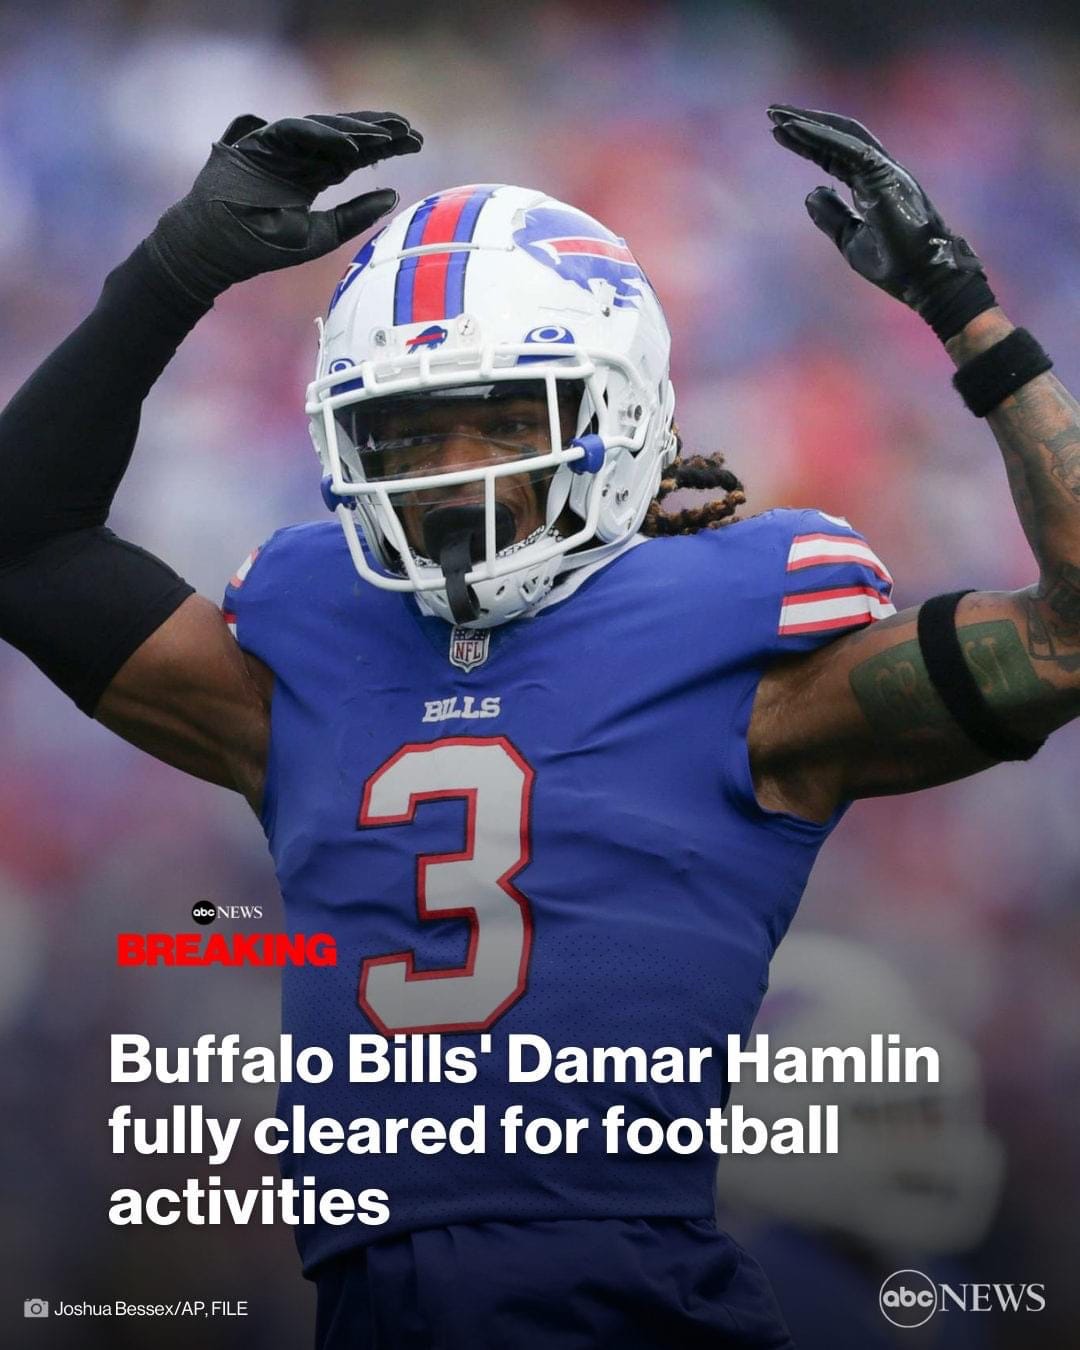 Buffalo Bills' Damar Hamlin fully cleared for football activities - ABC News